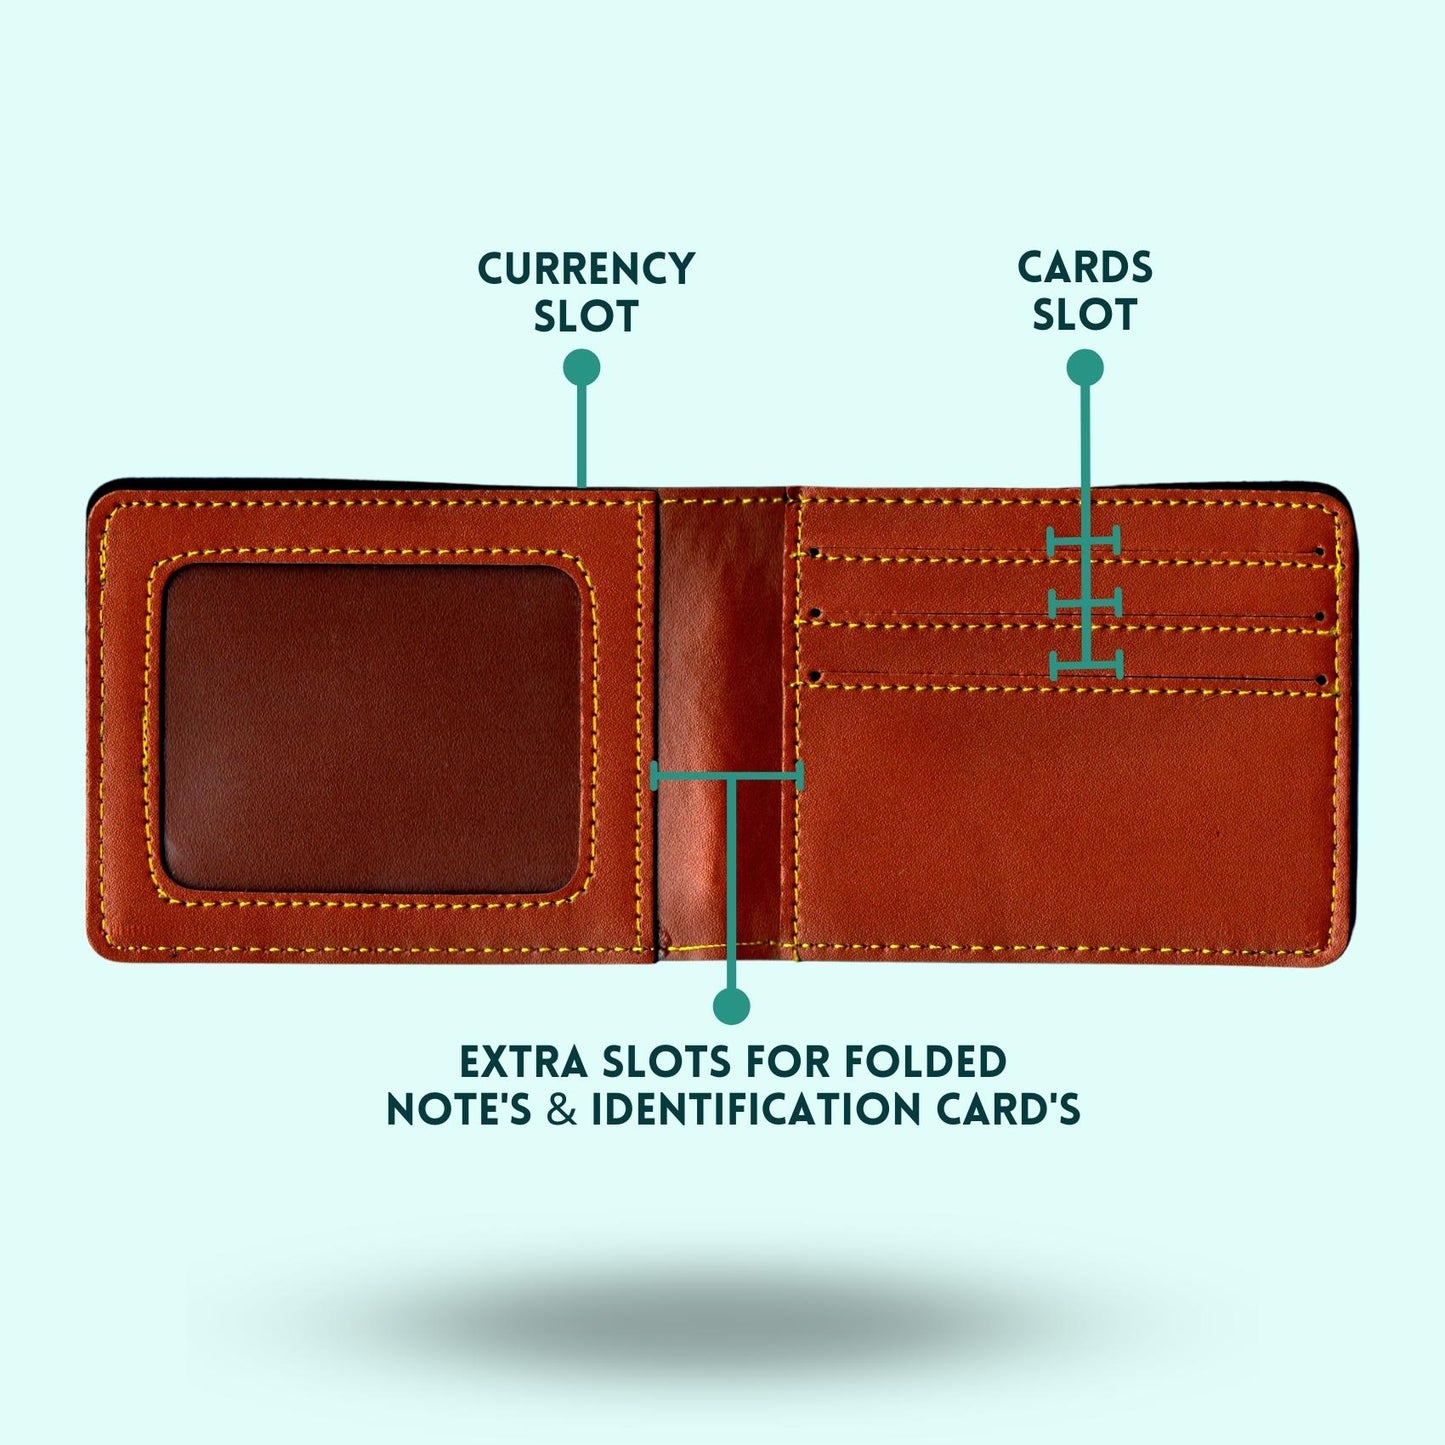 Personalized 5-in-1 Gift Hamper for Men ( Includes 1 Free Bottle ) - Card Holder, Mens Wallet, Keychain, Sunglass Case, Bottle